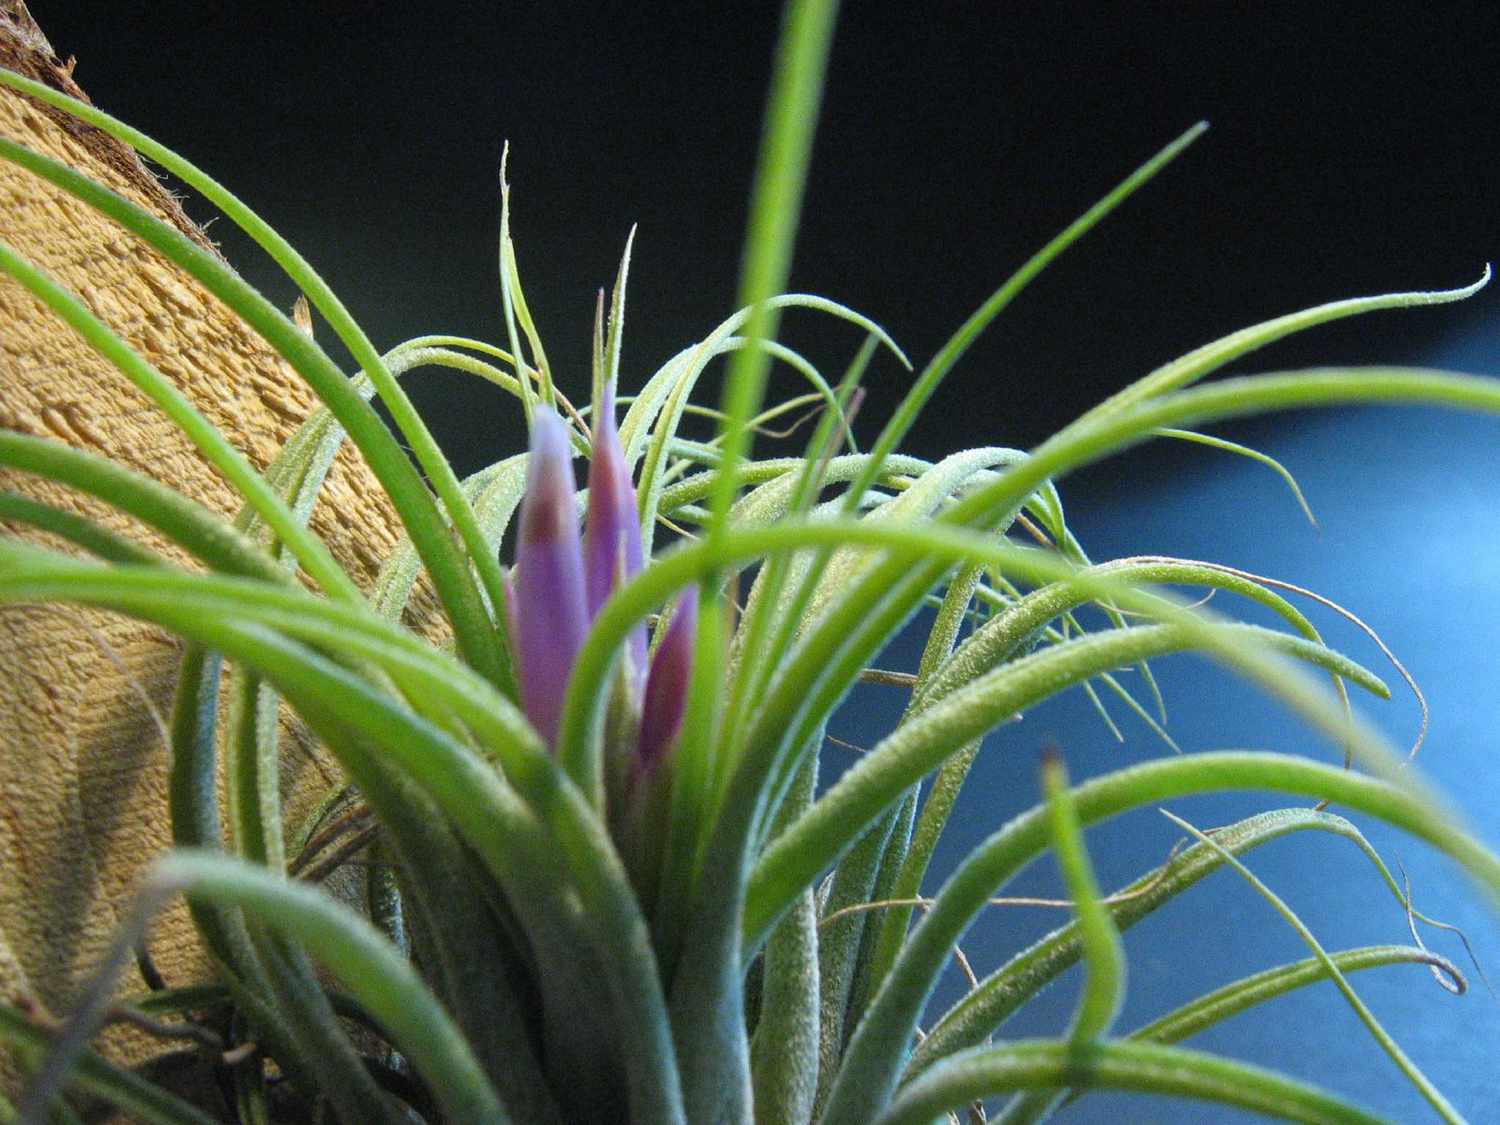 Tillandsia kolbii airplant with purple flower bloom closeup